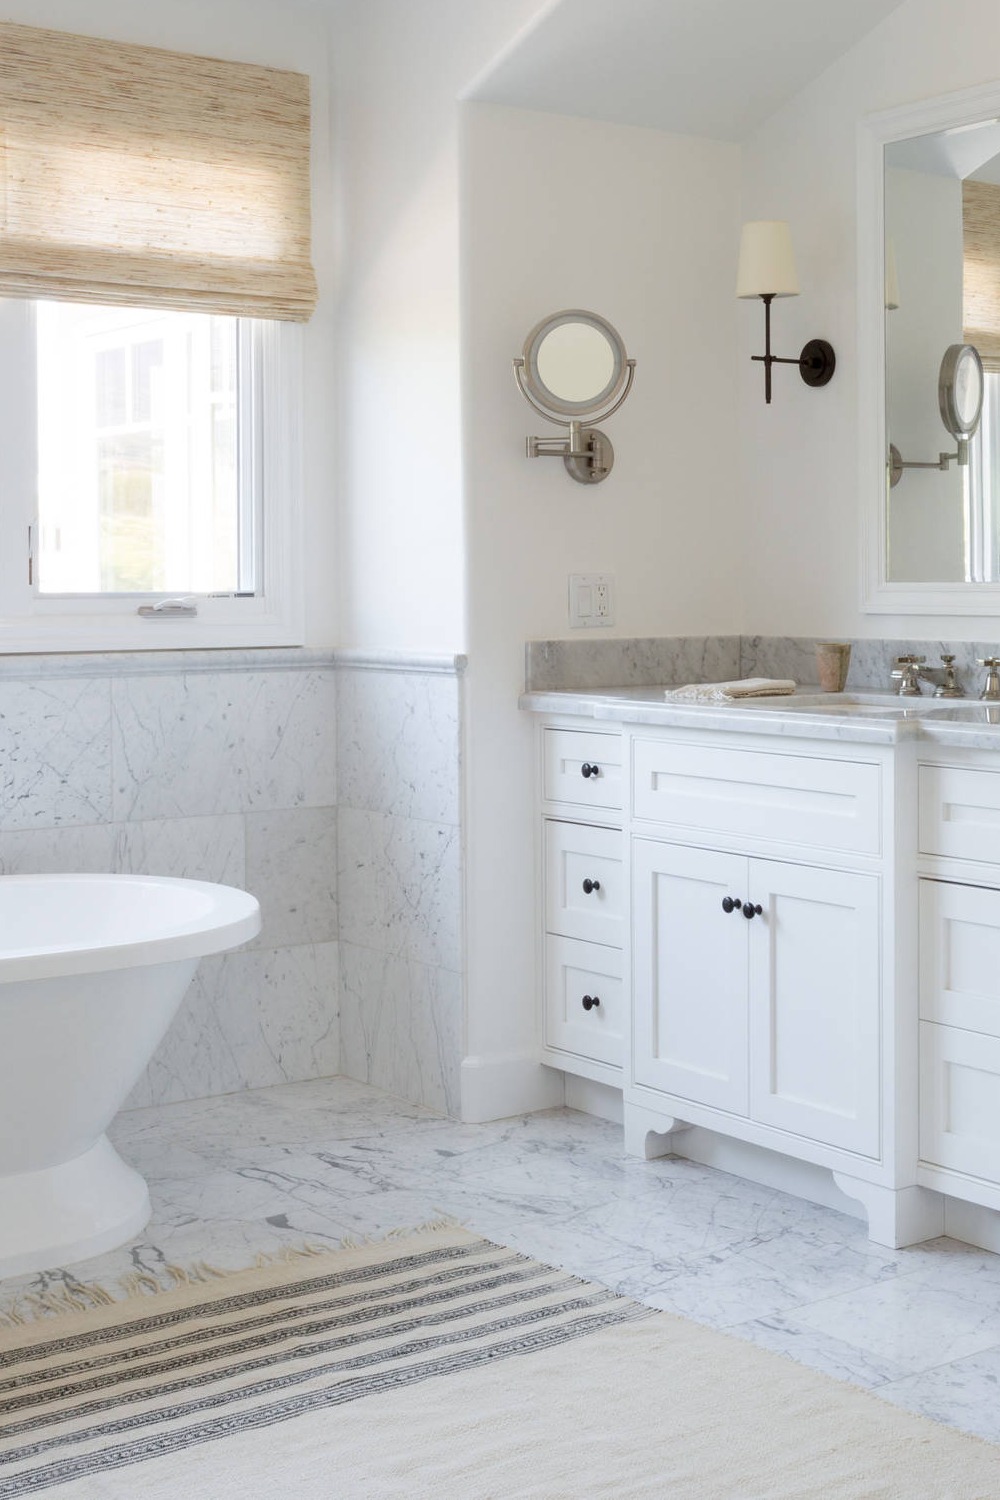 Beaded Inset Cabinet White Carrara Marble Flooring Counter Undermount Sink Mirror Bathtub